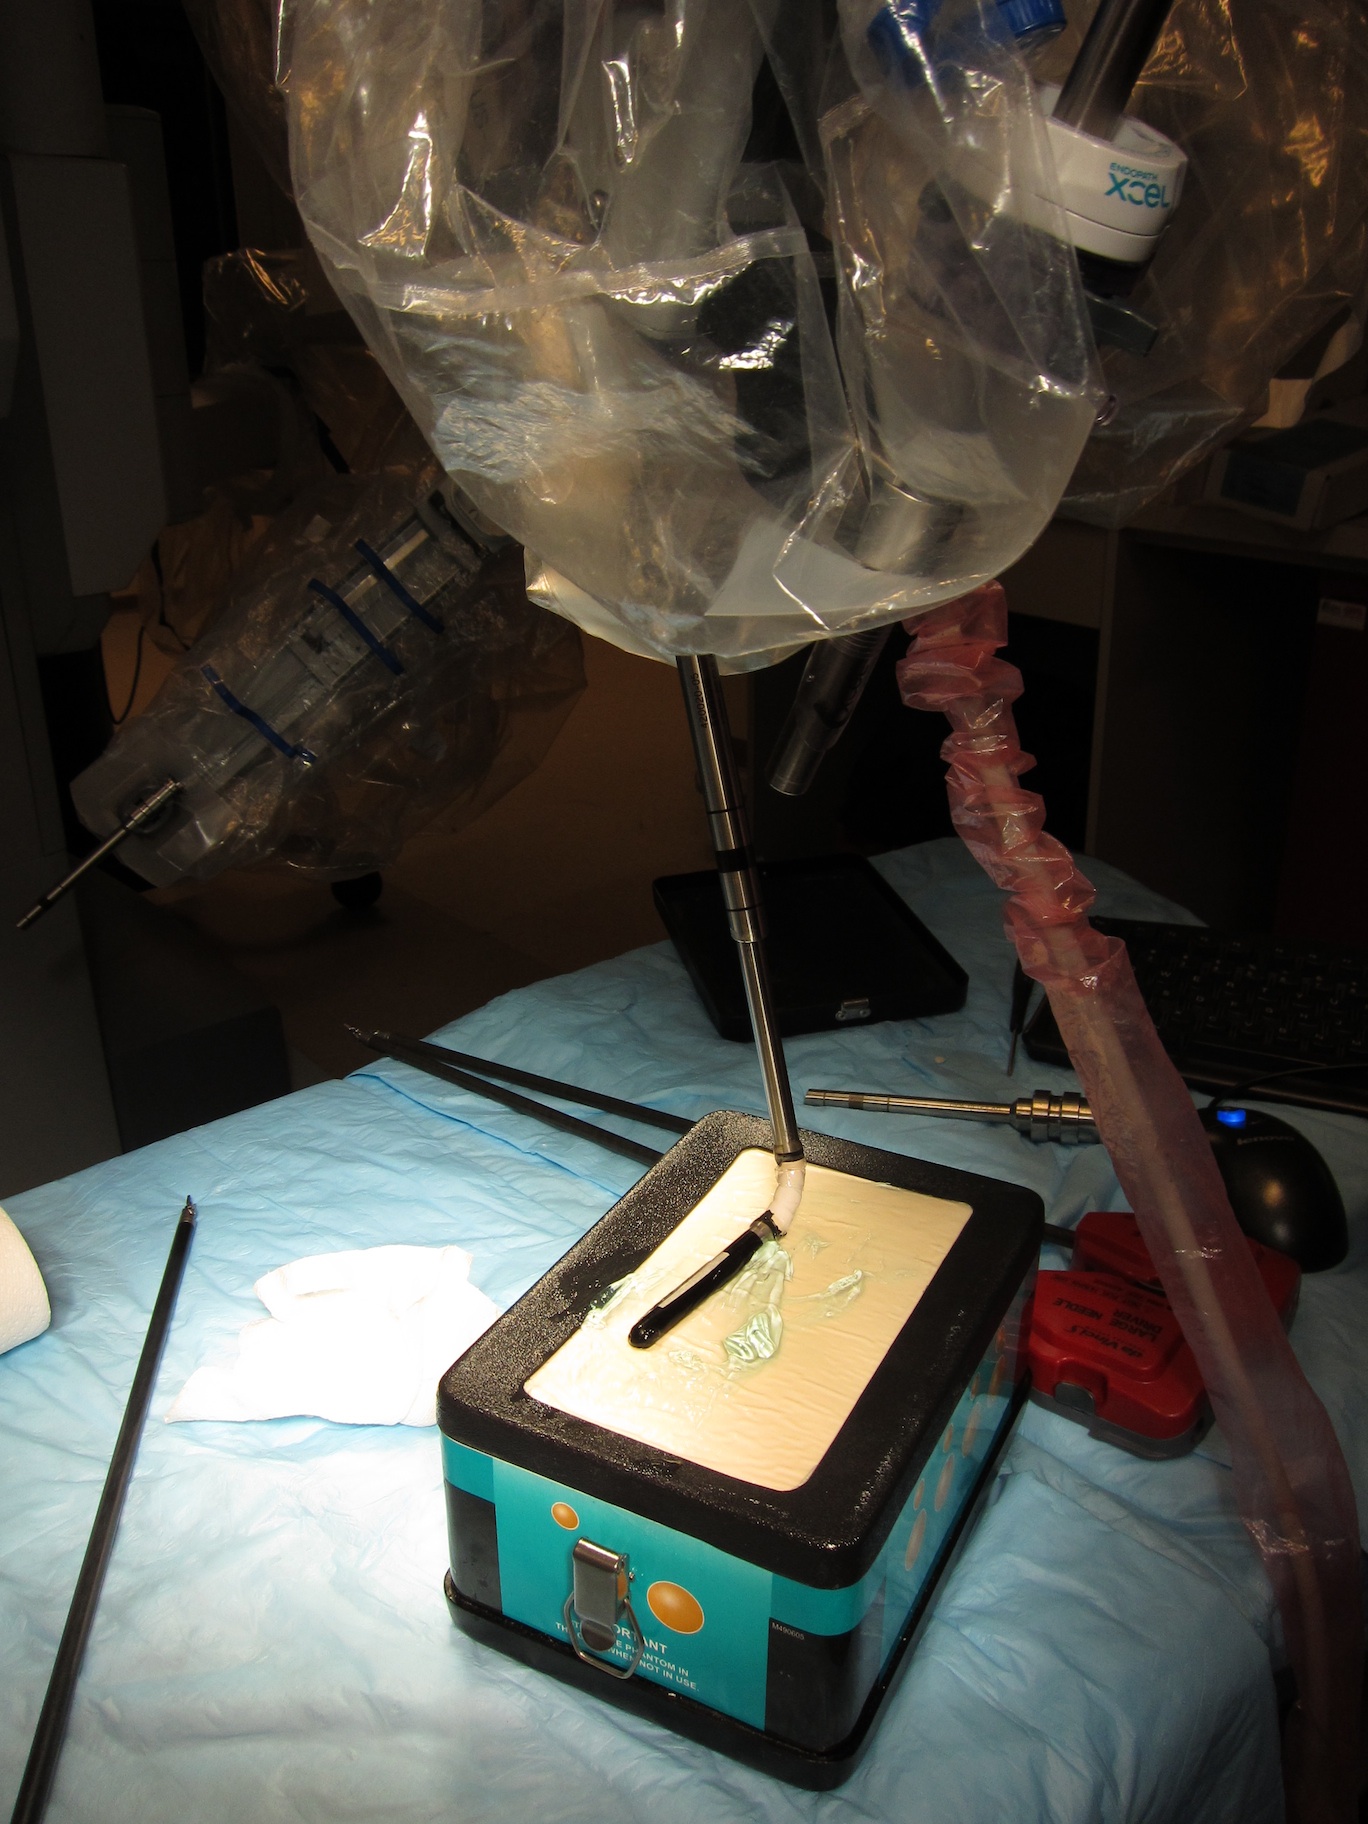 da Vinci robot slave arm controlling the ultrasound probe